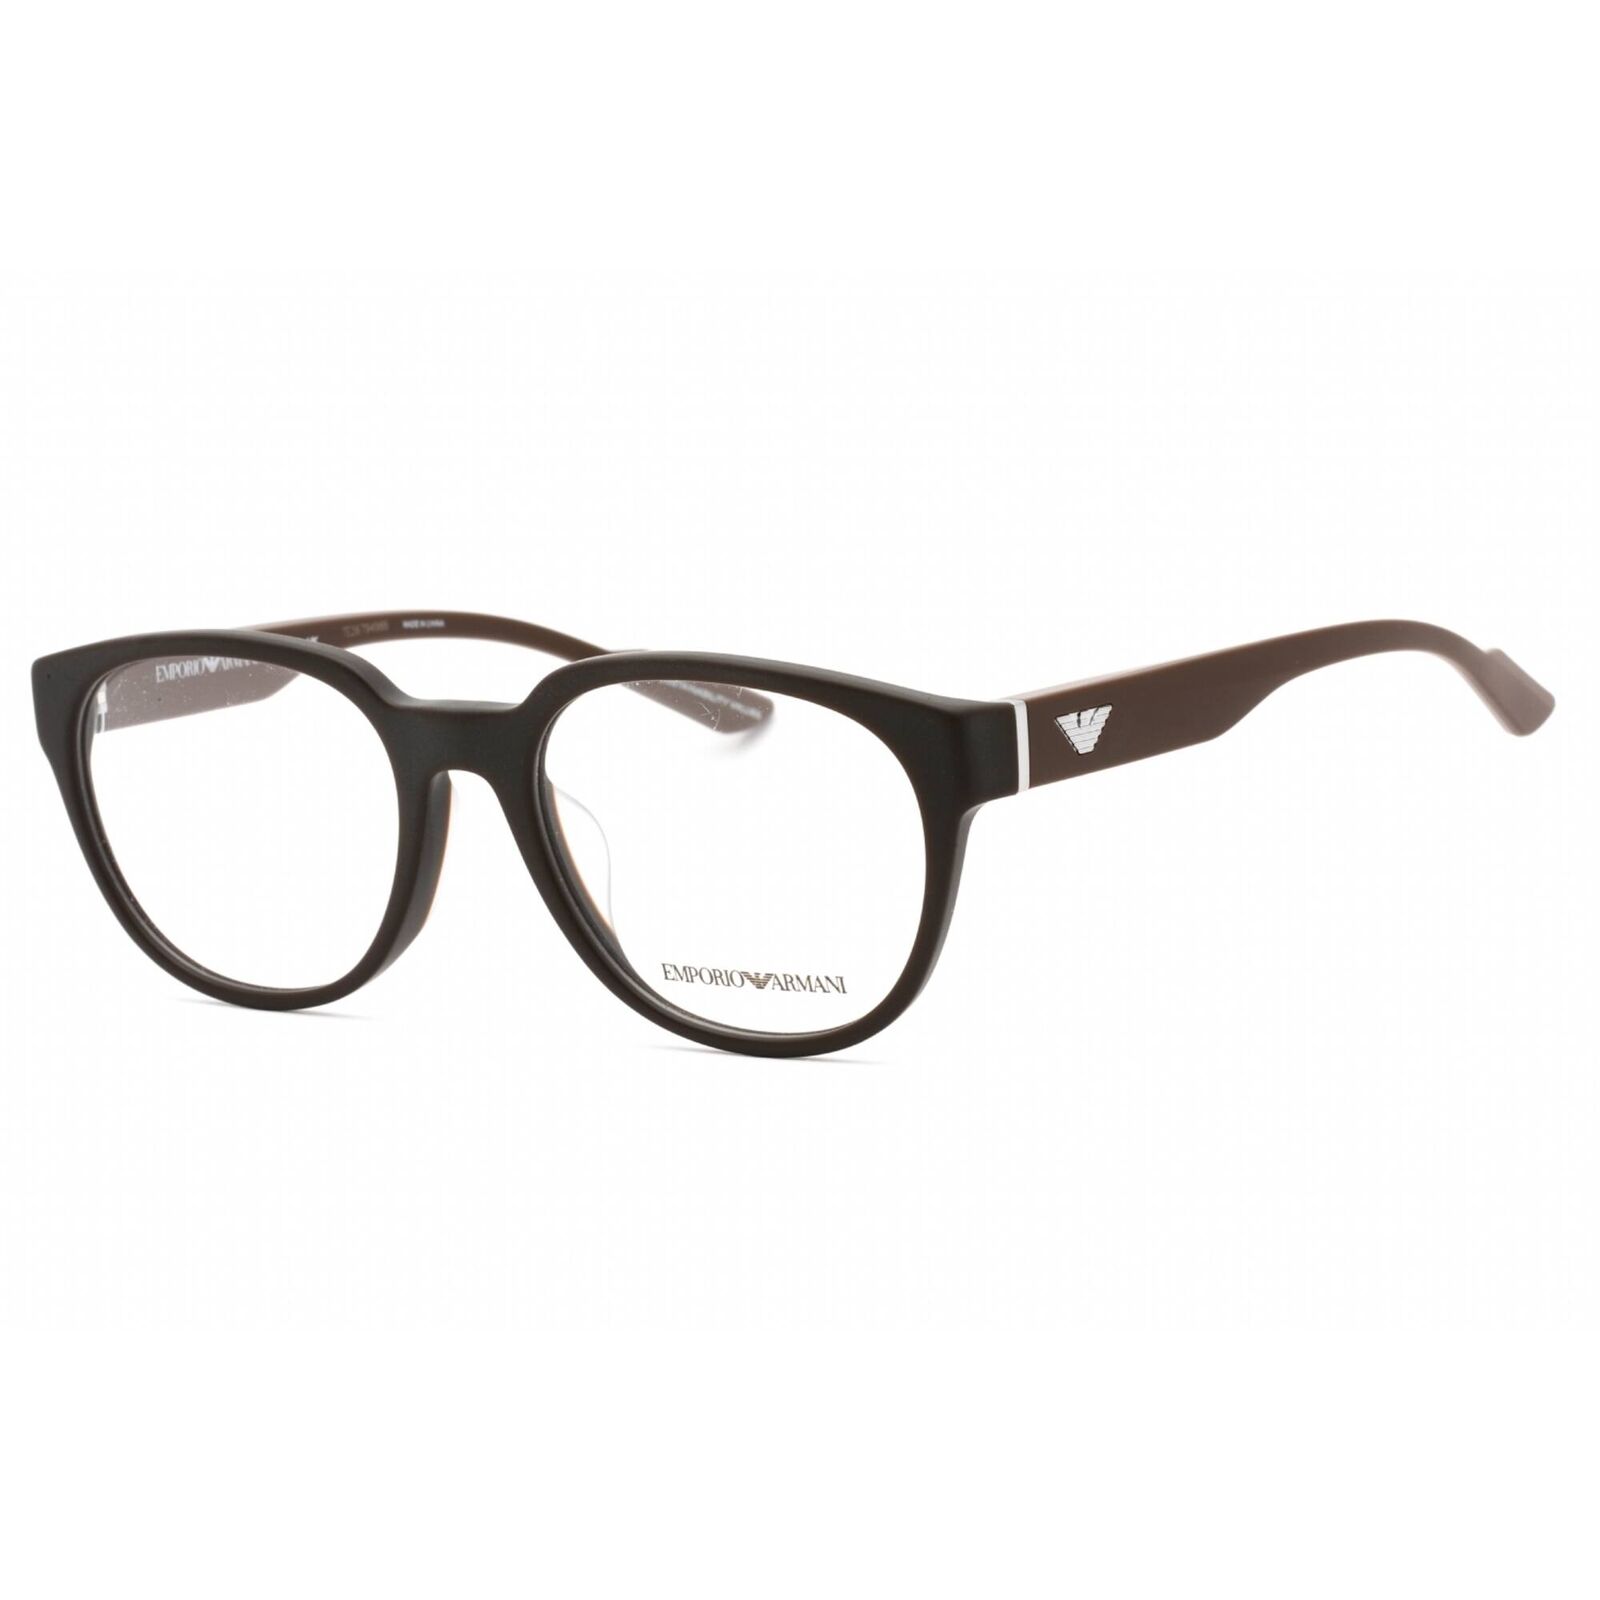 Emporio Armani Men's Eyeglasses Matte Brown Full Rim Round Frame 0EA3224F 5260 Emporio Armani 0EA3224F 5260